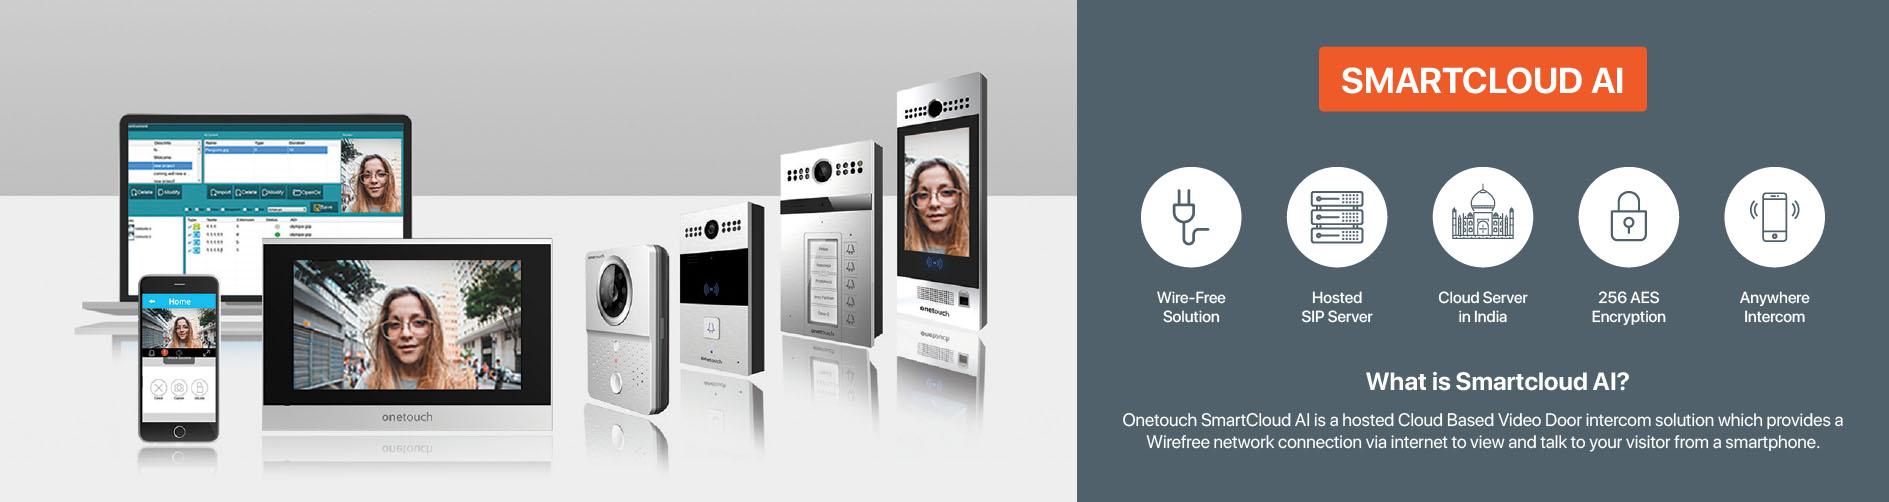 Onetouch Smartcloud AI – Smart Cloud AI based Video Door Phone. 